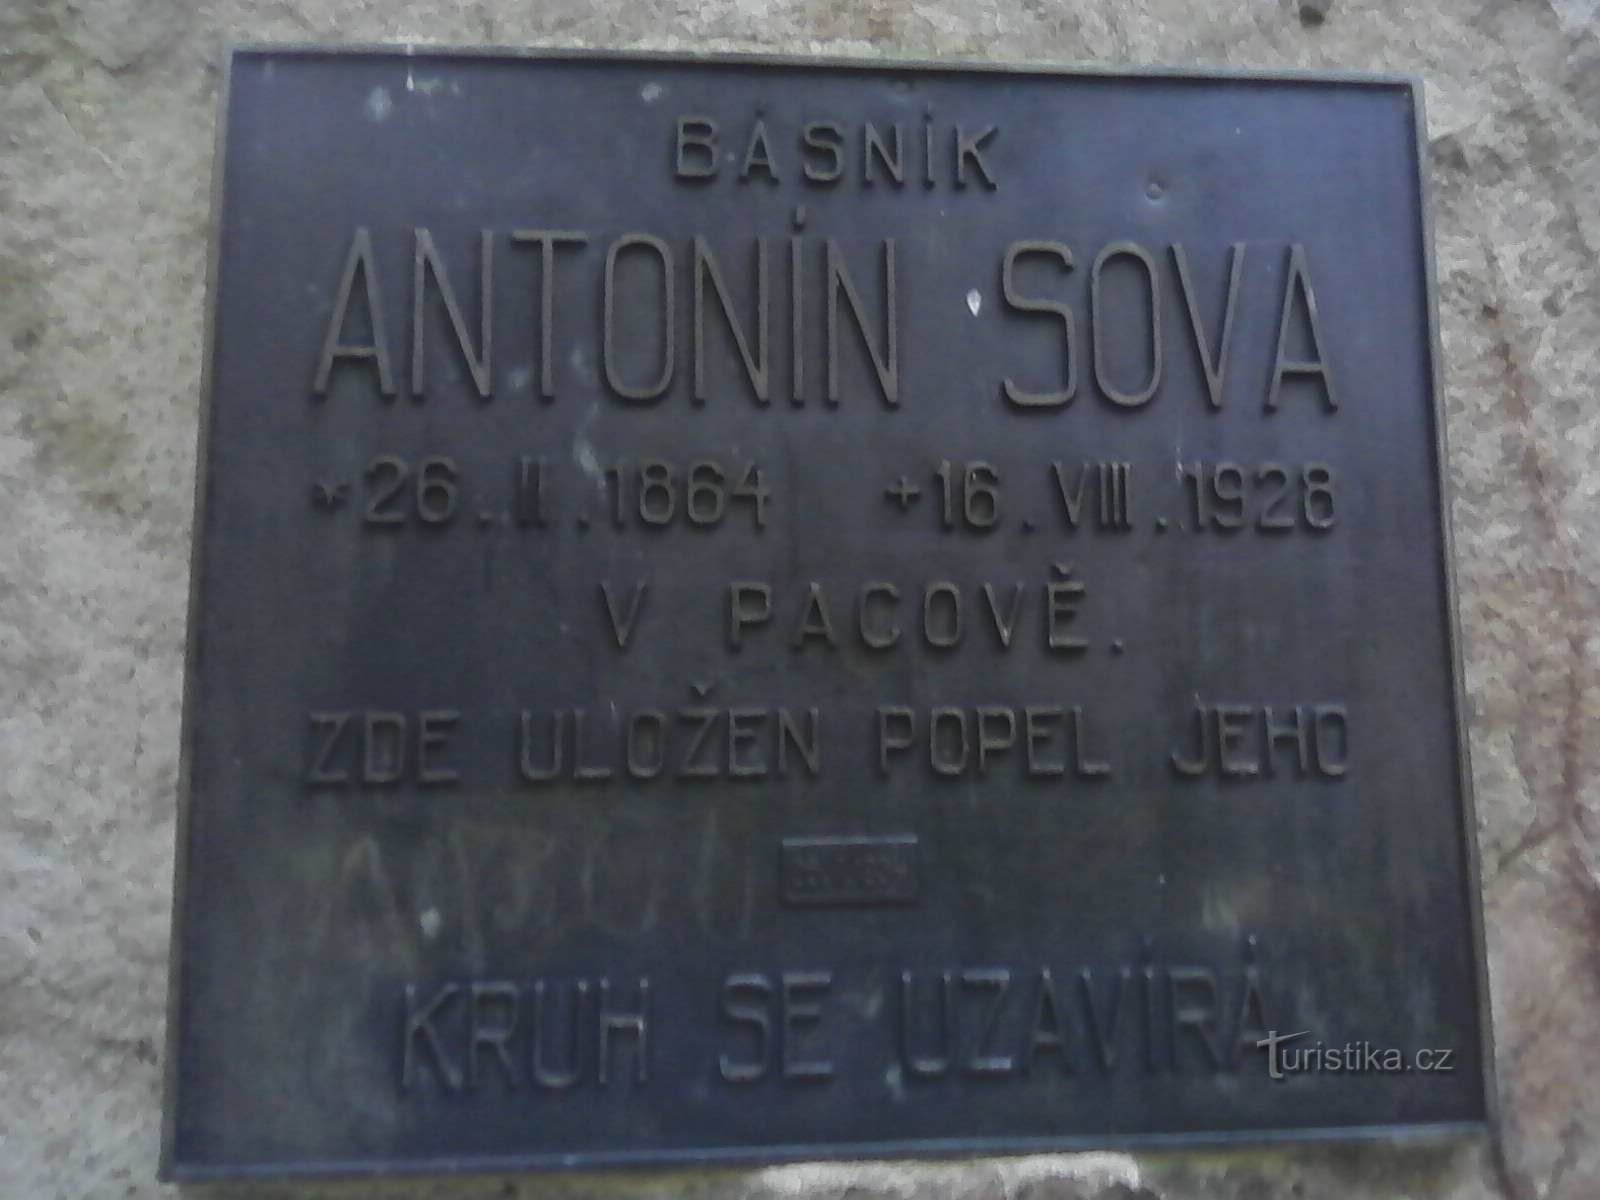 2. Targa commemorativa sul monumento al poeta del 1934.